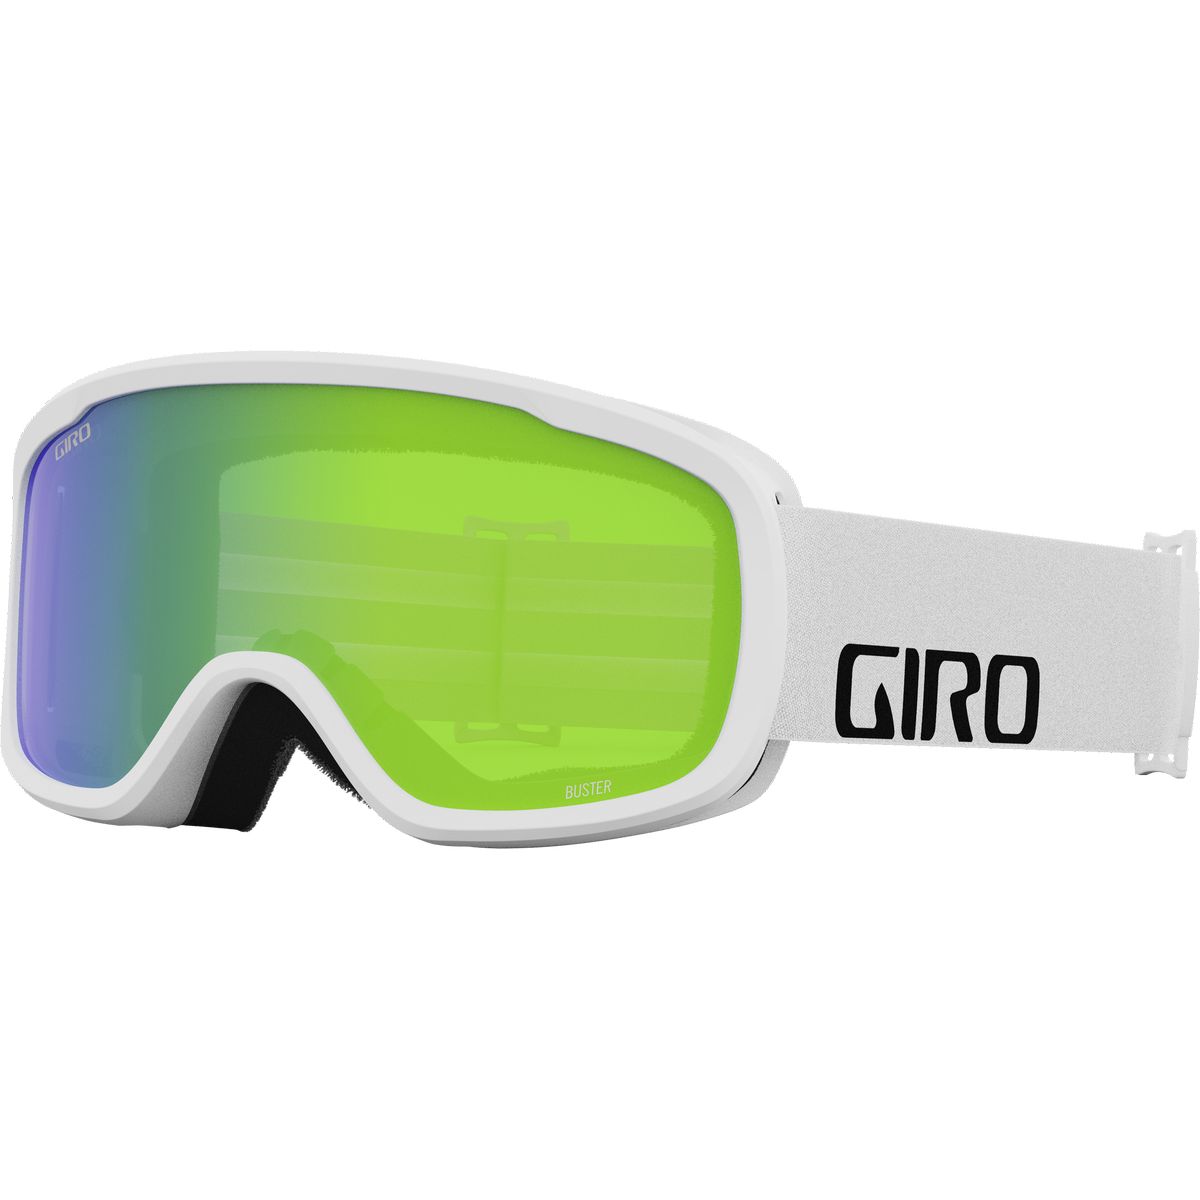 GIRO Snow Goggle Buster Kinder Skibrille